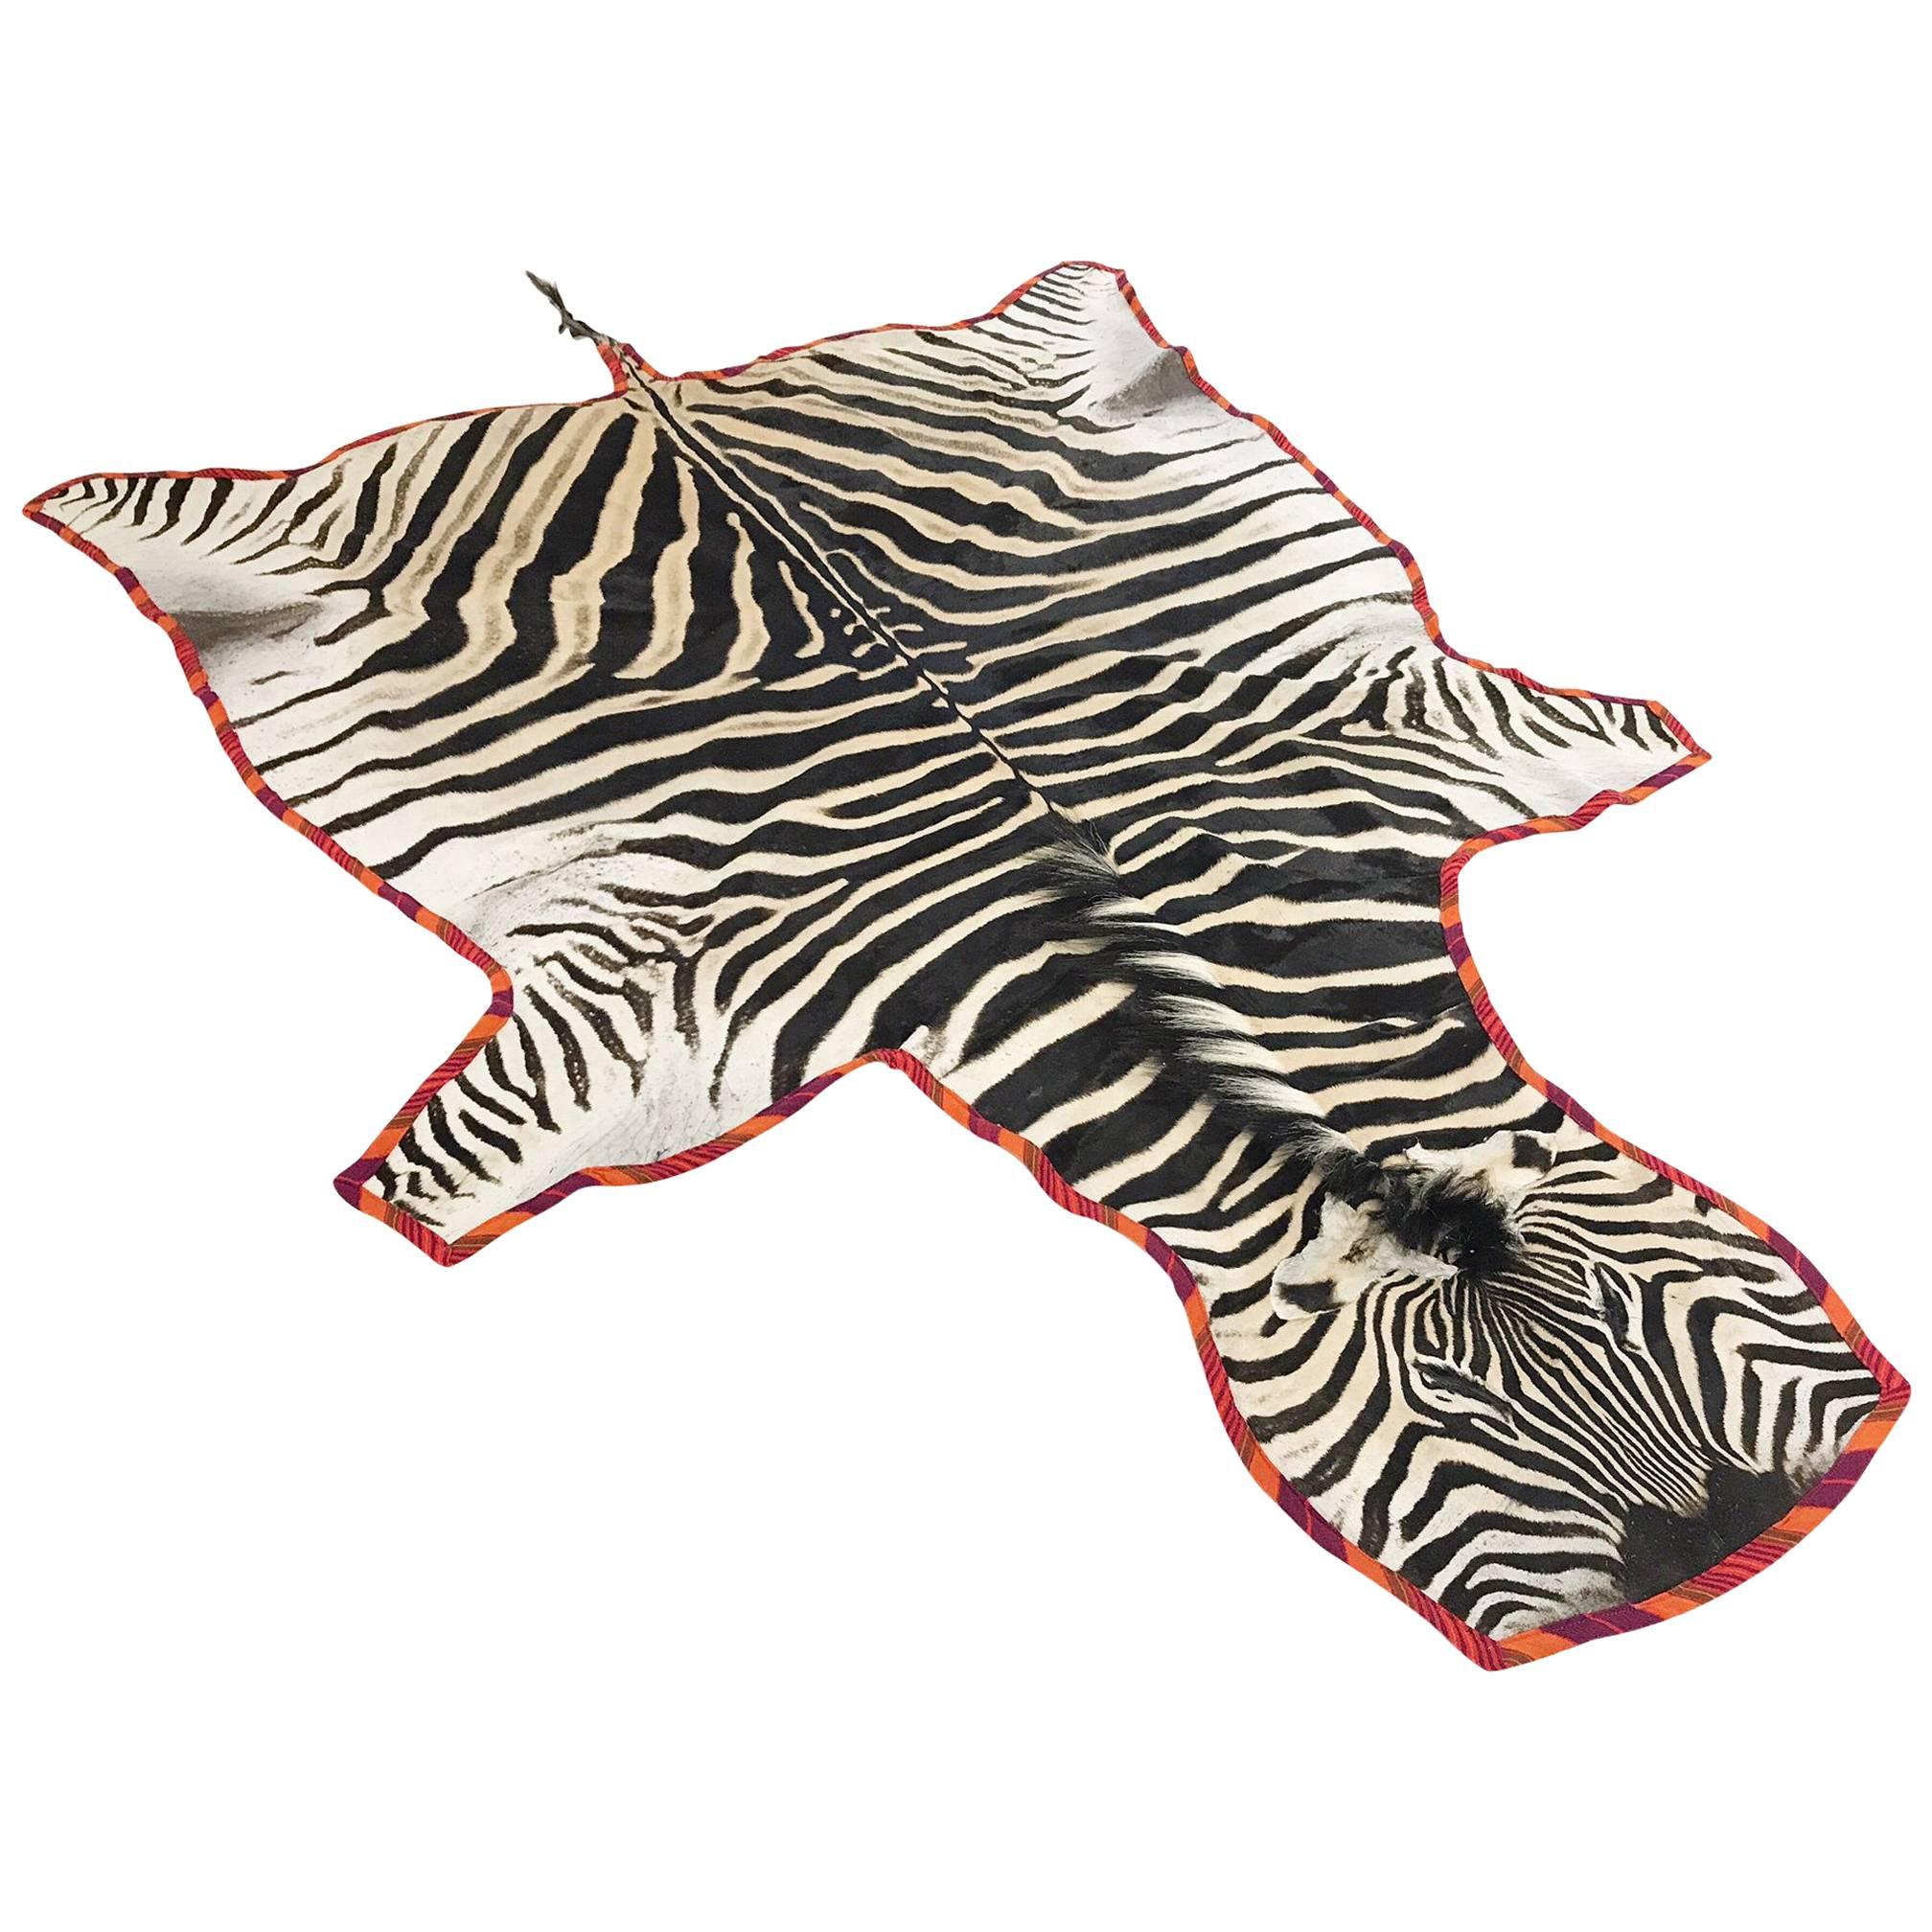 Zebra Hide Rug Trimmed in Maasai Warrior Blanket